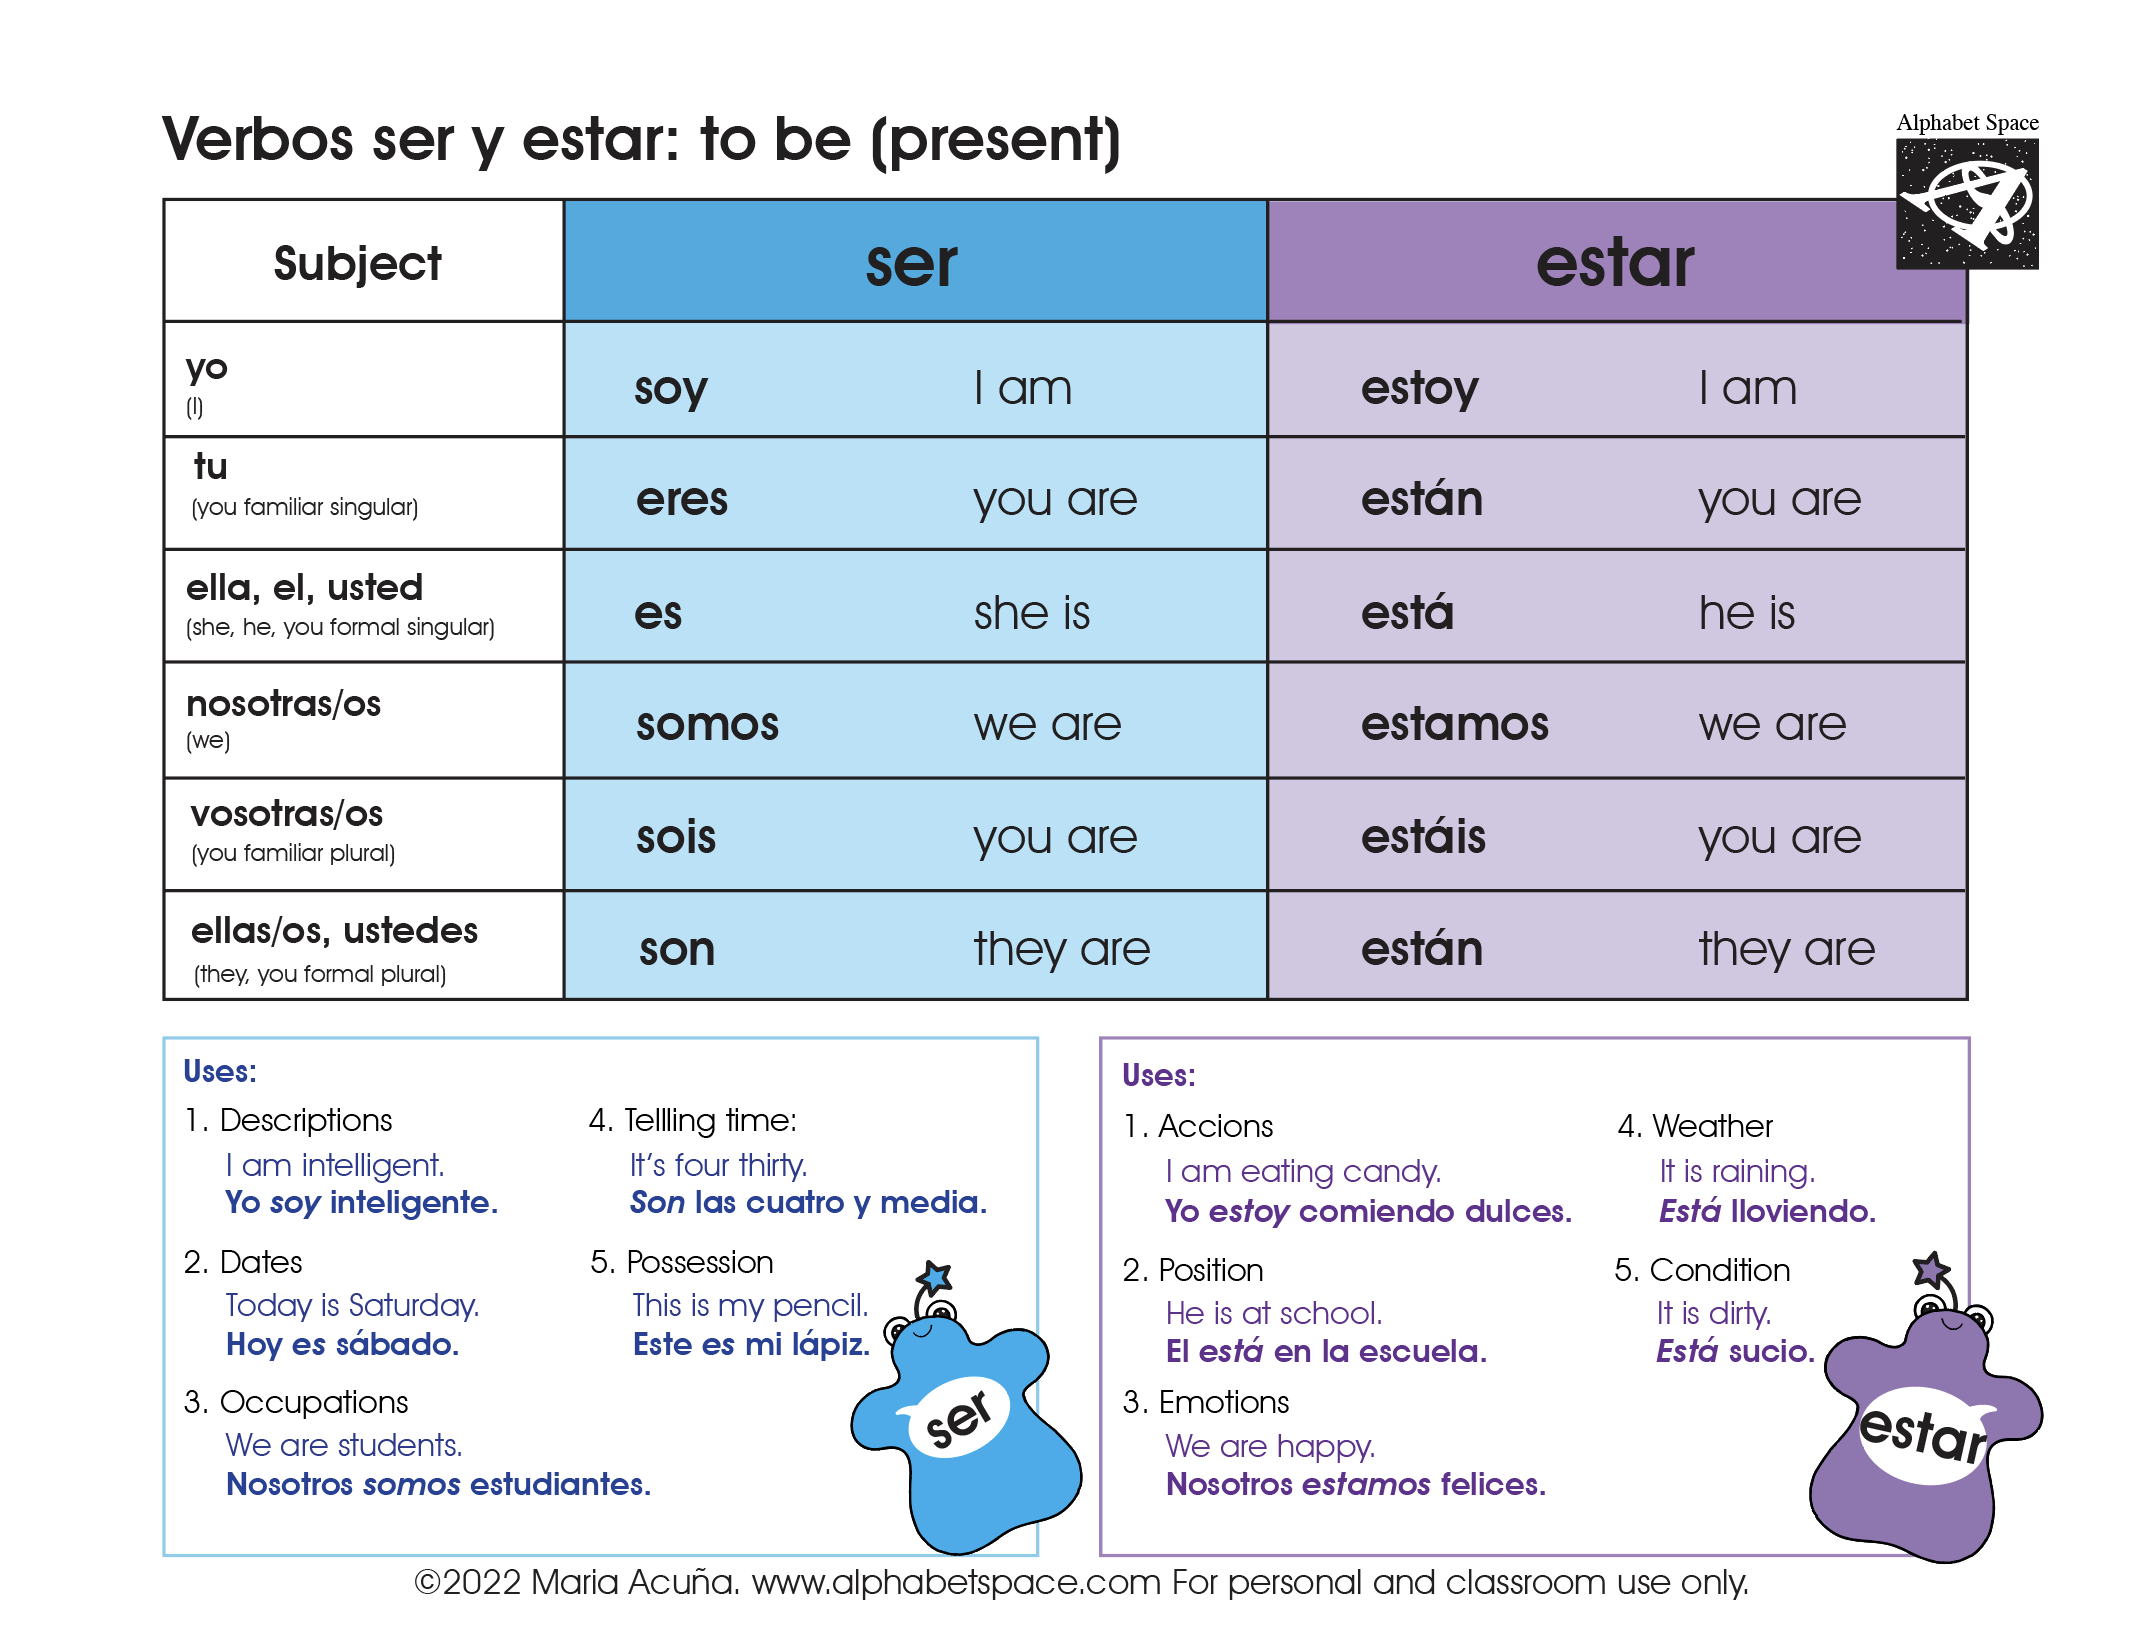 verbos-ser-y-estar-verb-to-be-present-tense-spanish-english-esl-for-children